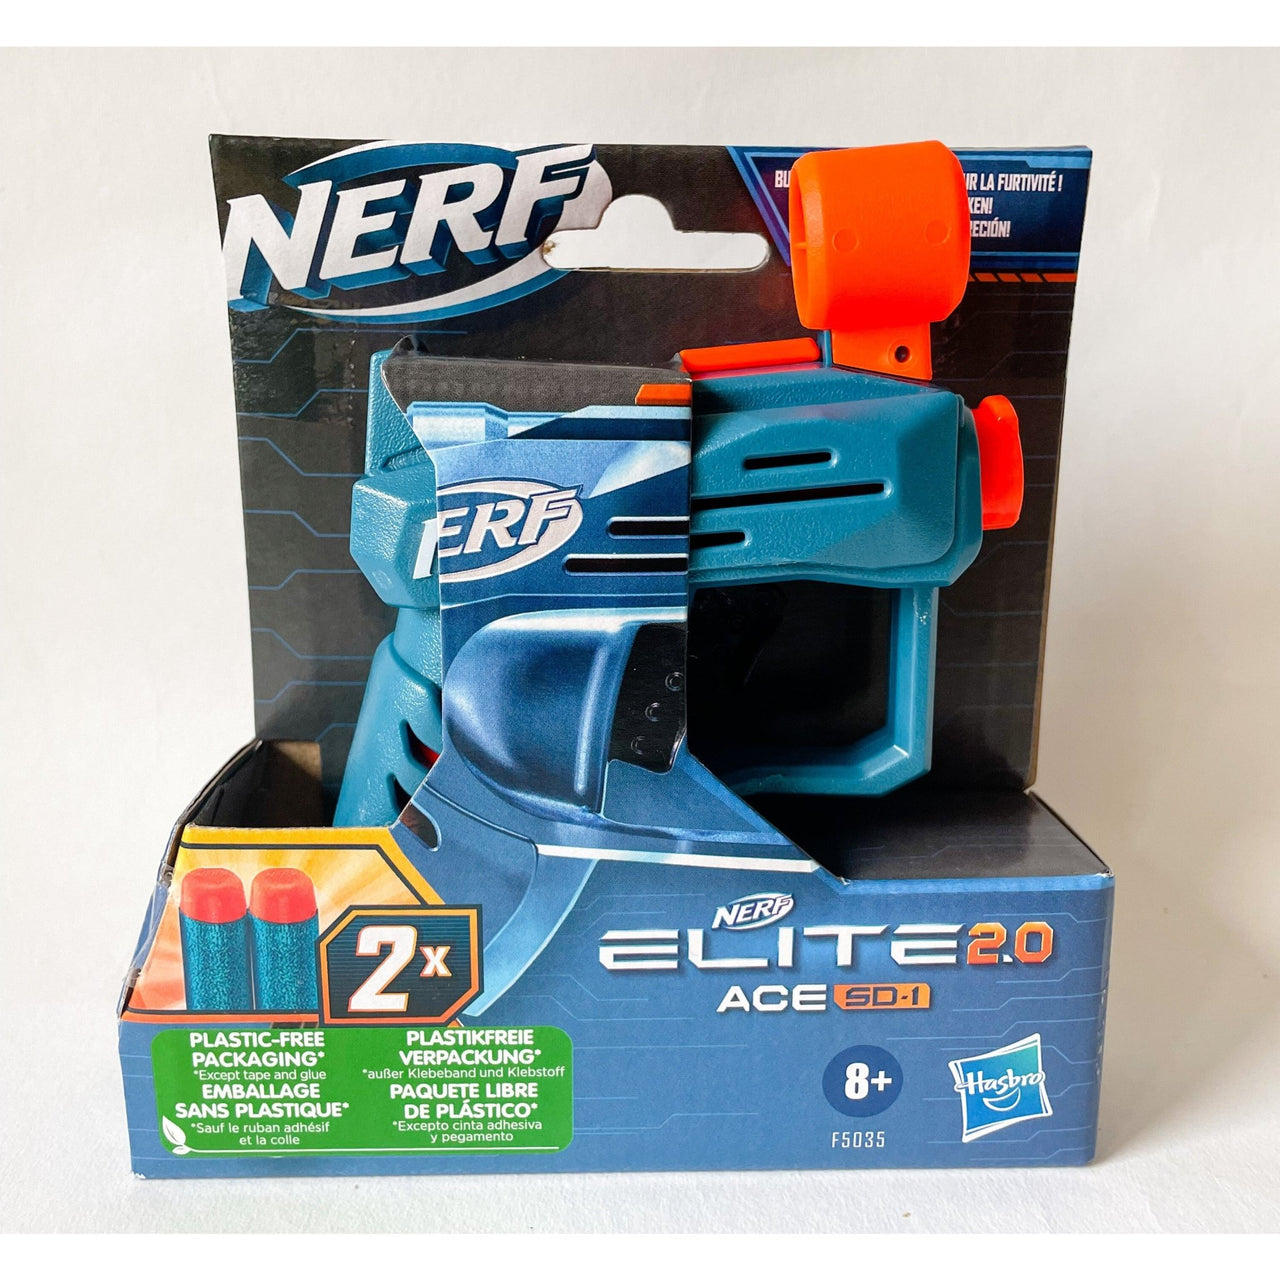 Nerf Elite 2.0 Ace SD-1 Blaster NERF